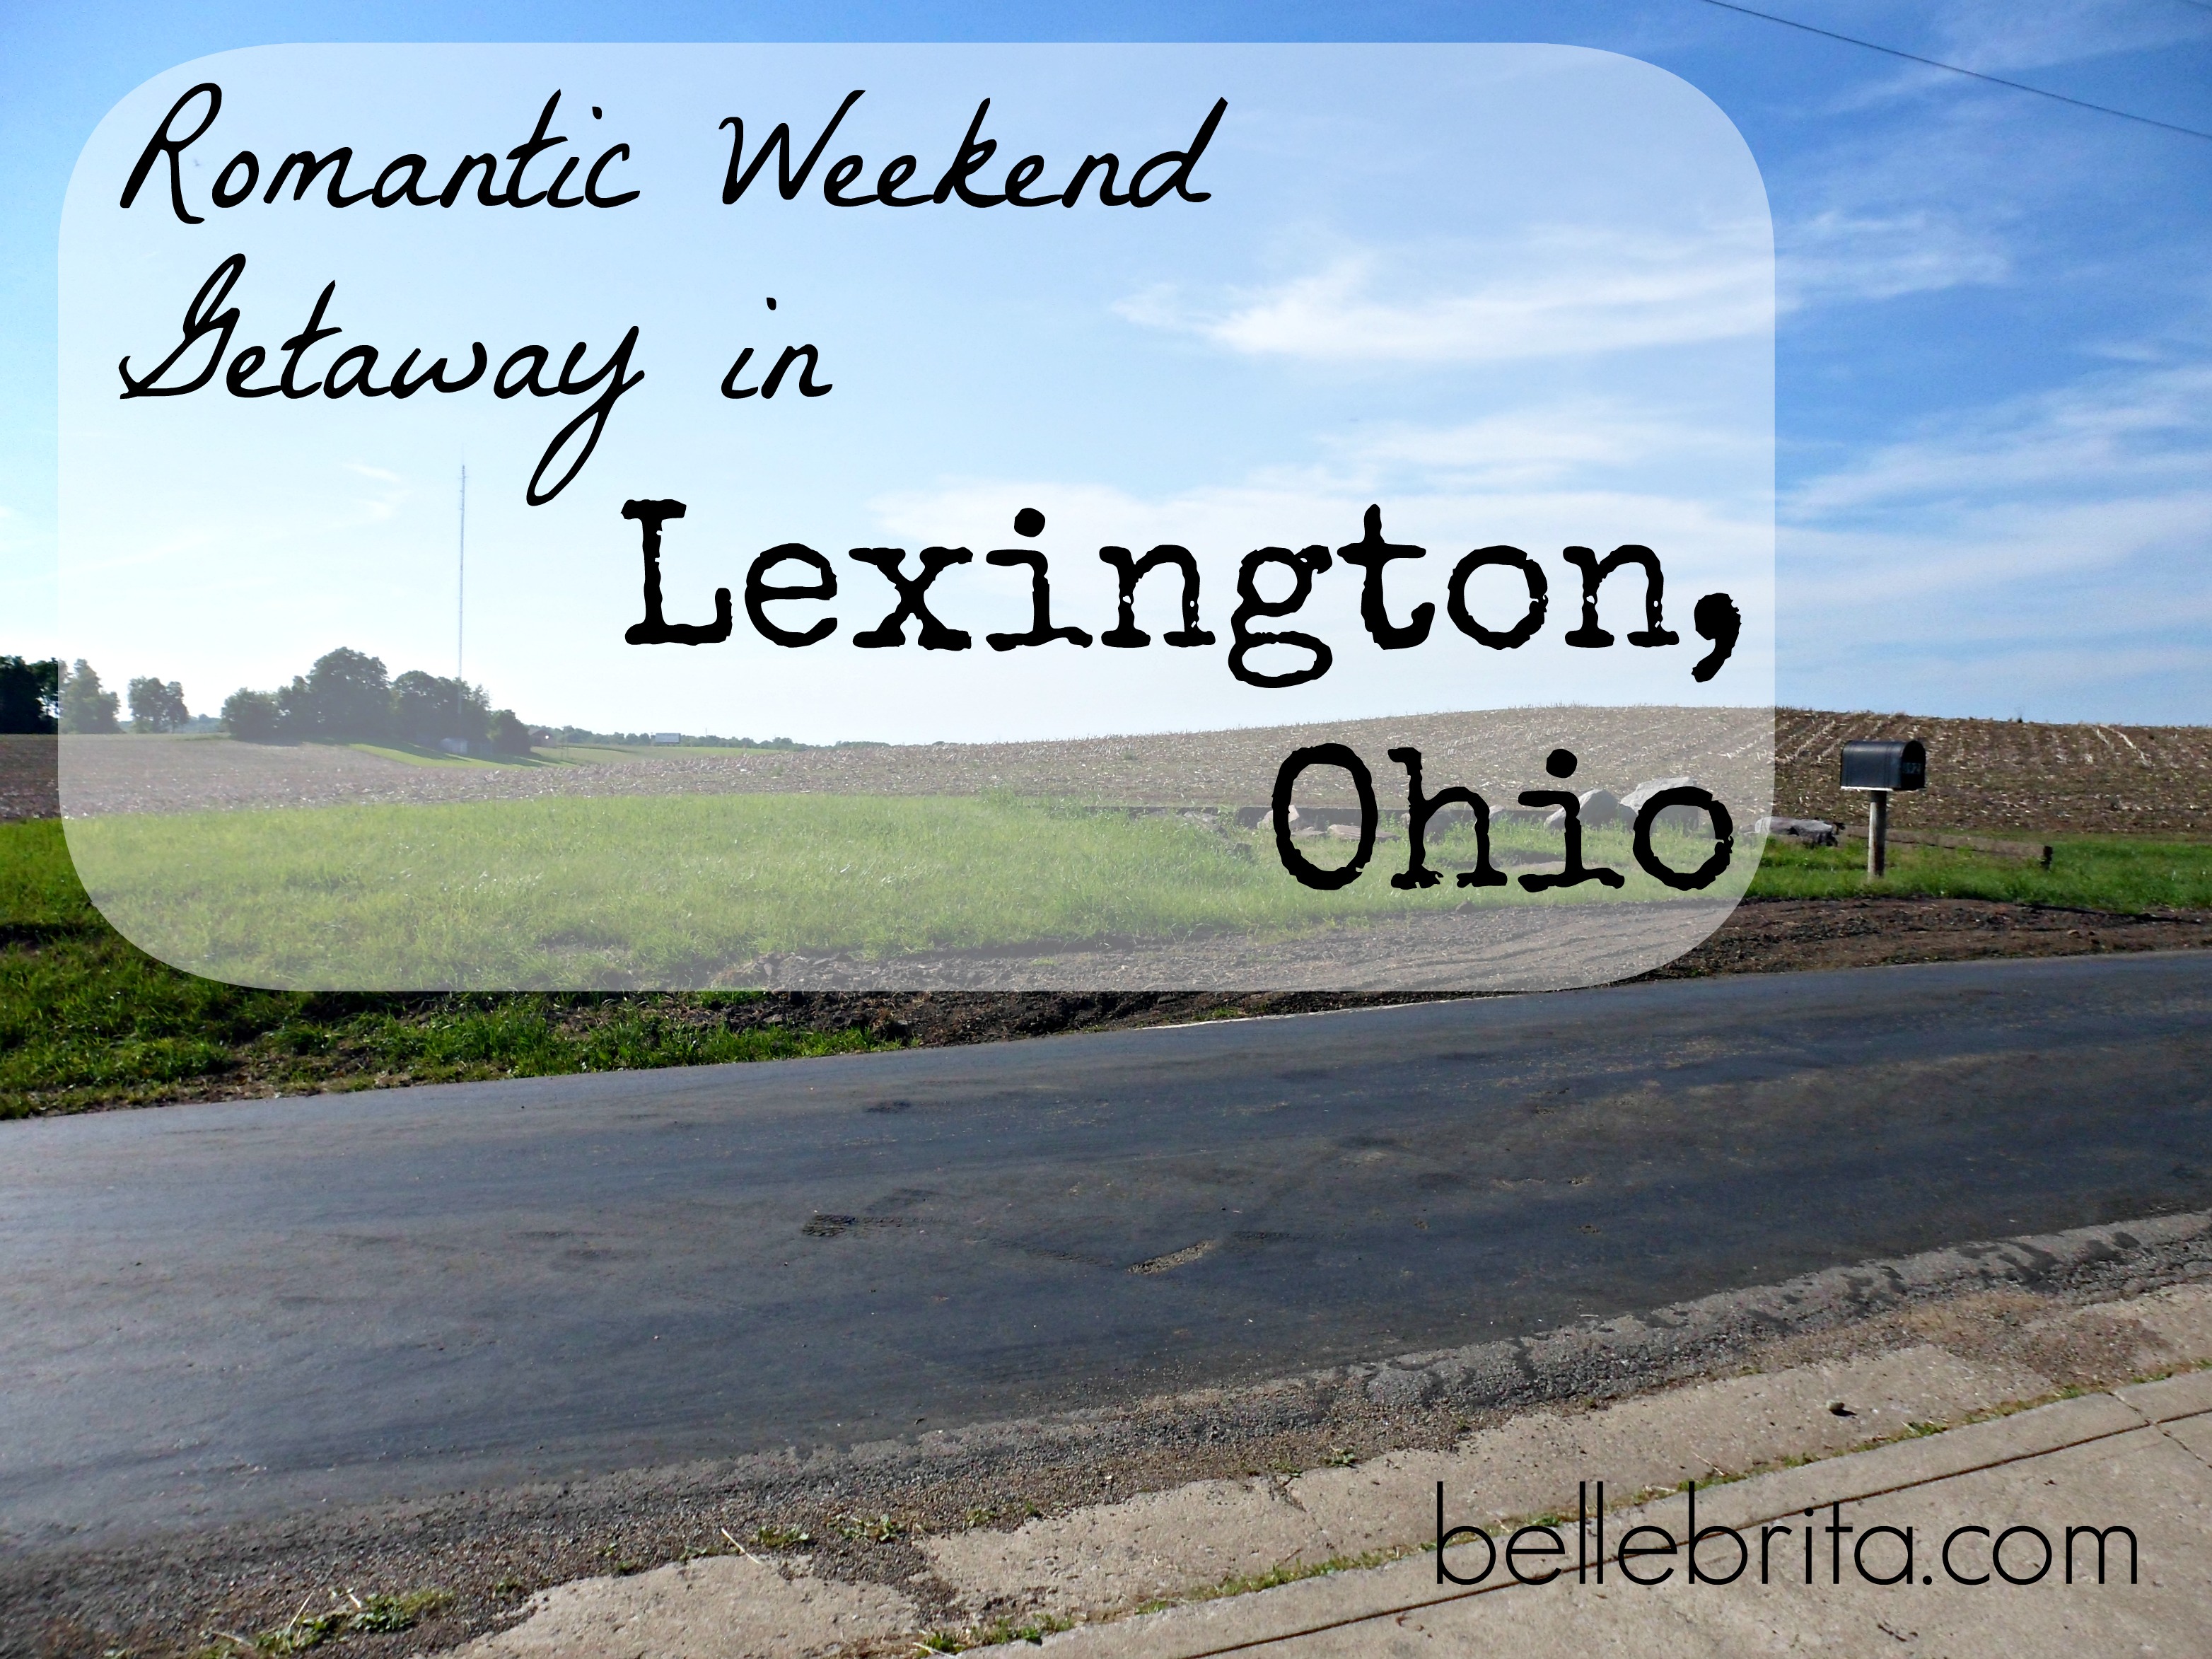 Romantic Weekend Getaway in Lexington, Ohio Belle Brita